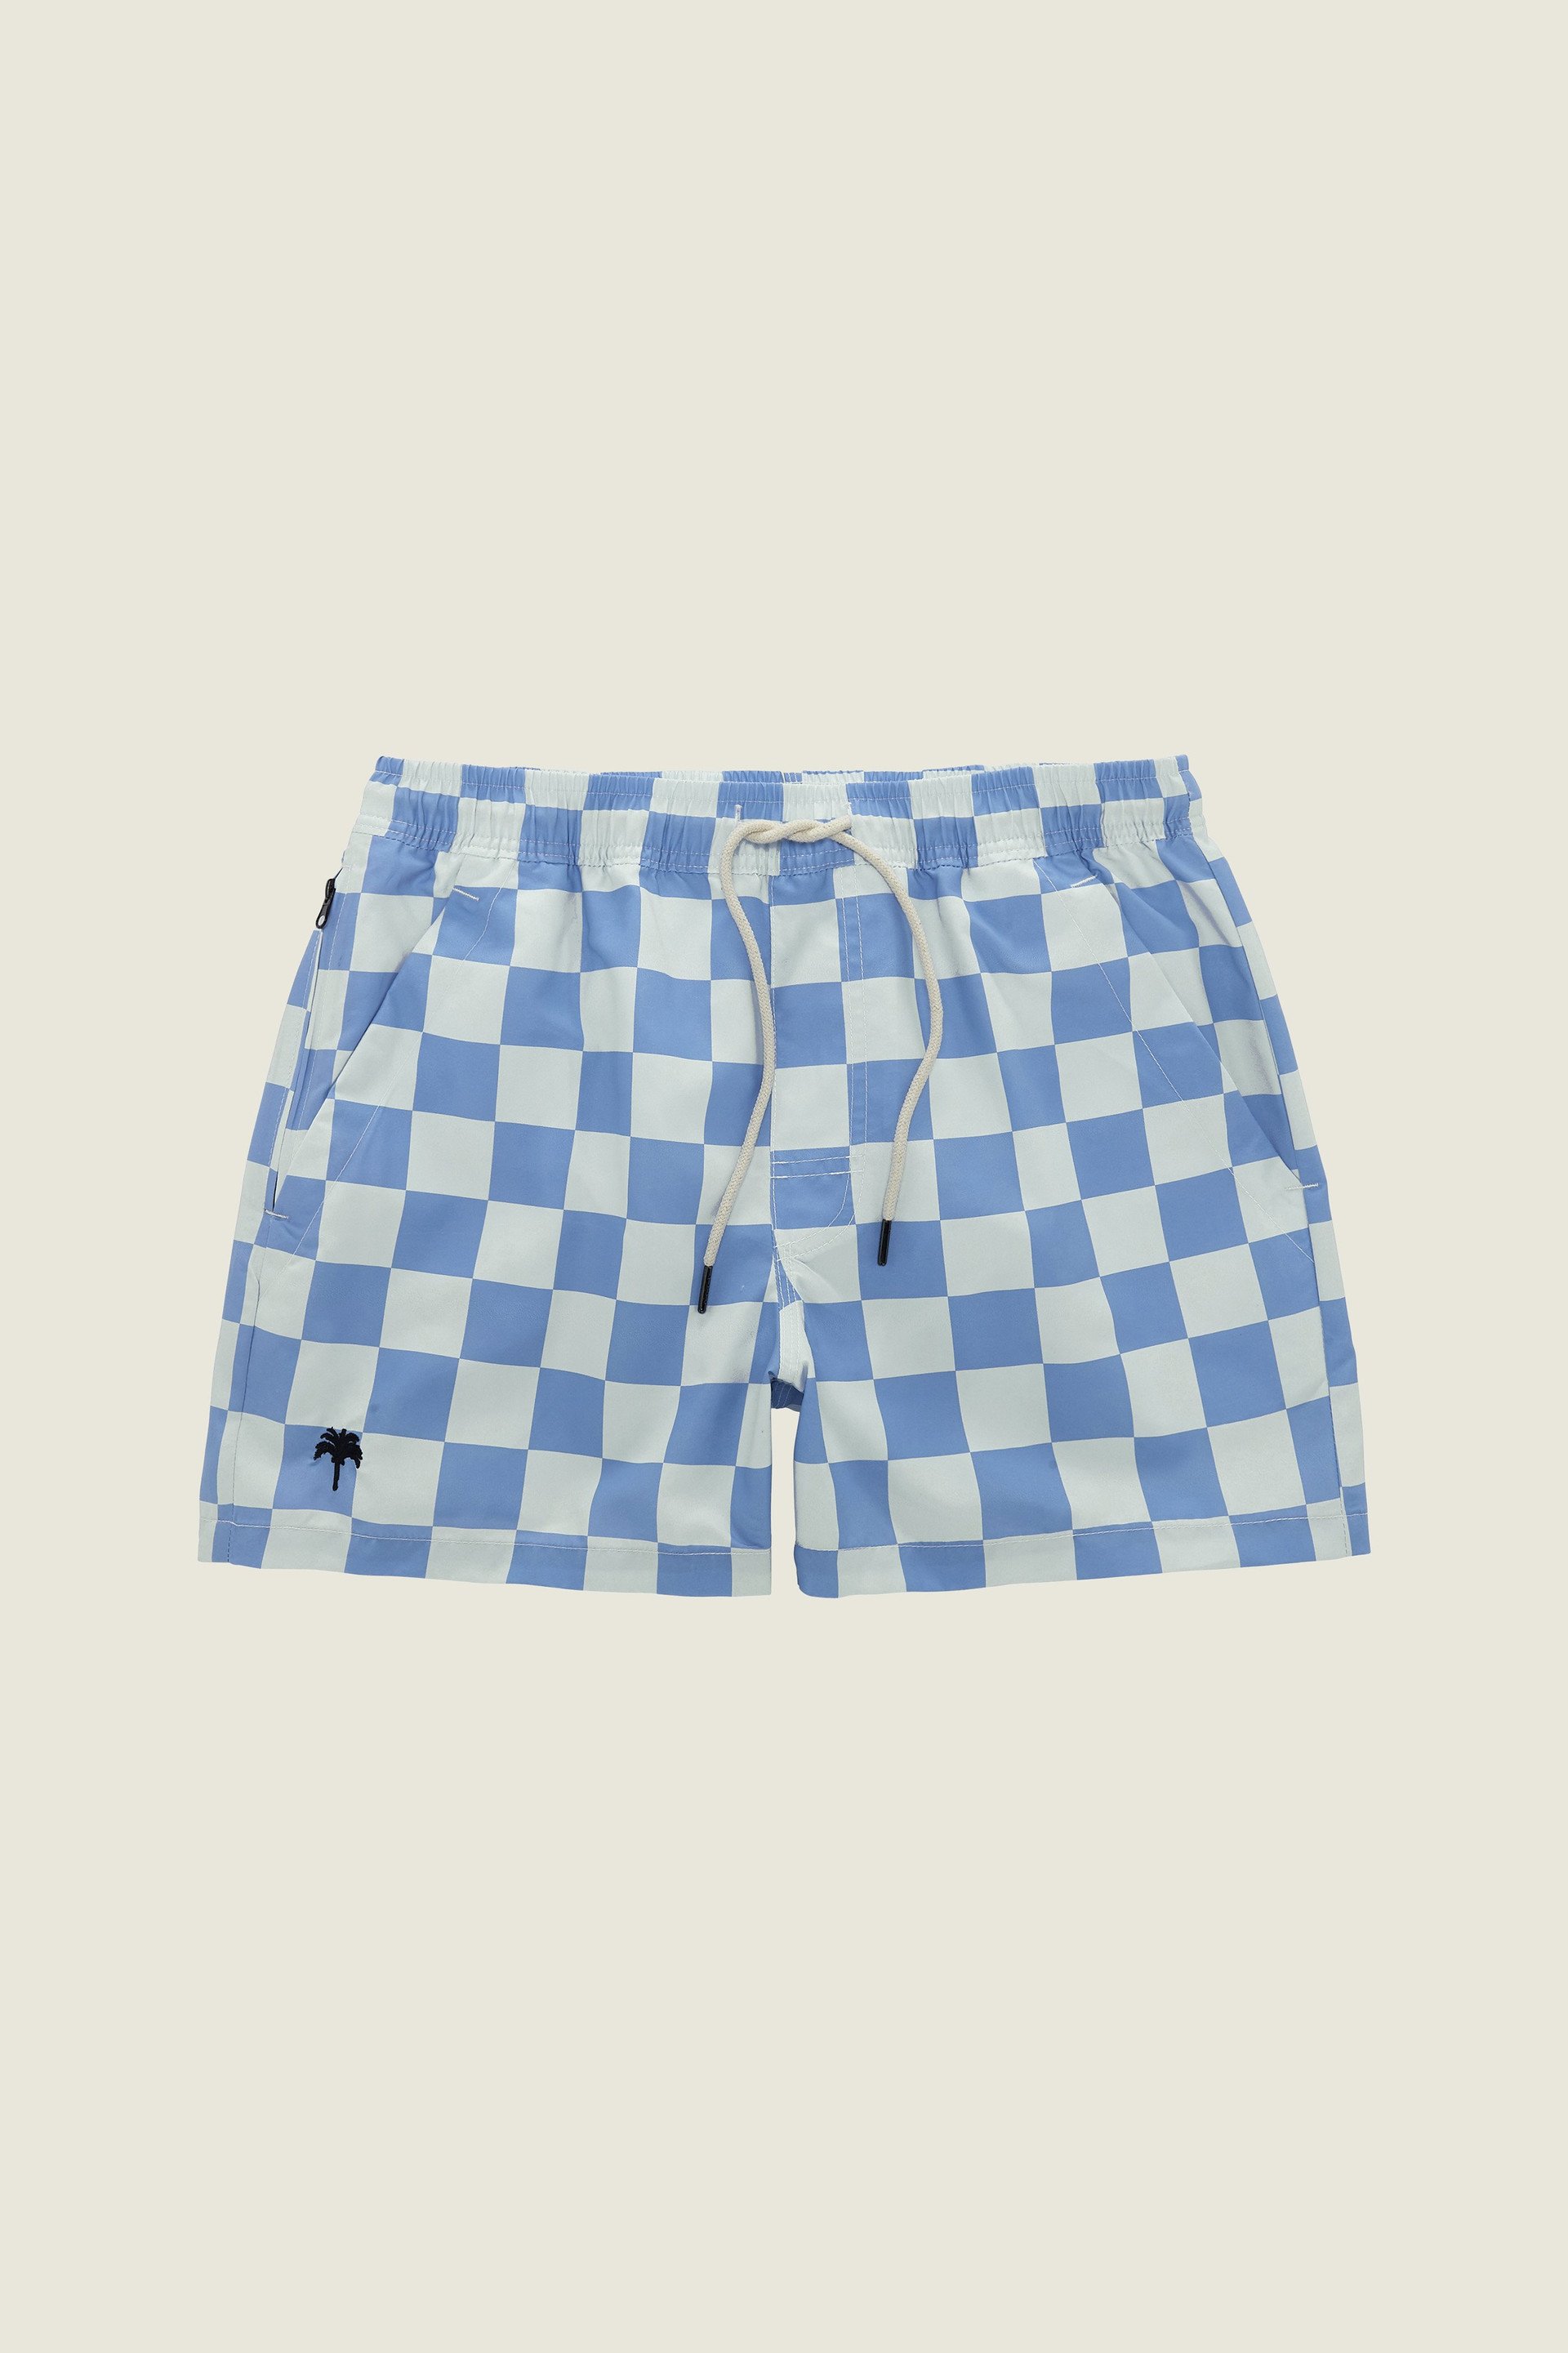 Blue Chess Swim Shorts